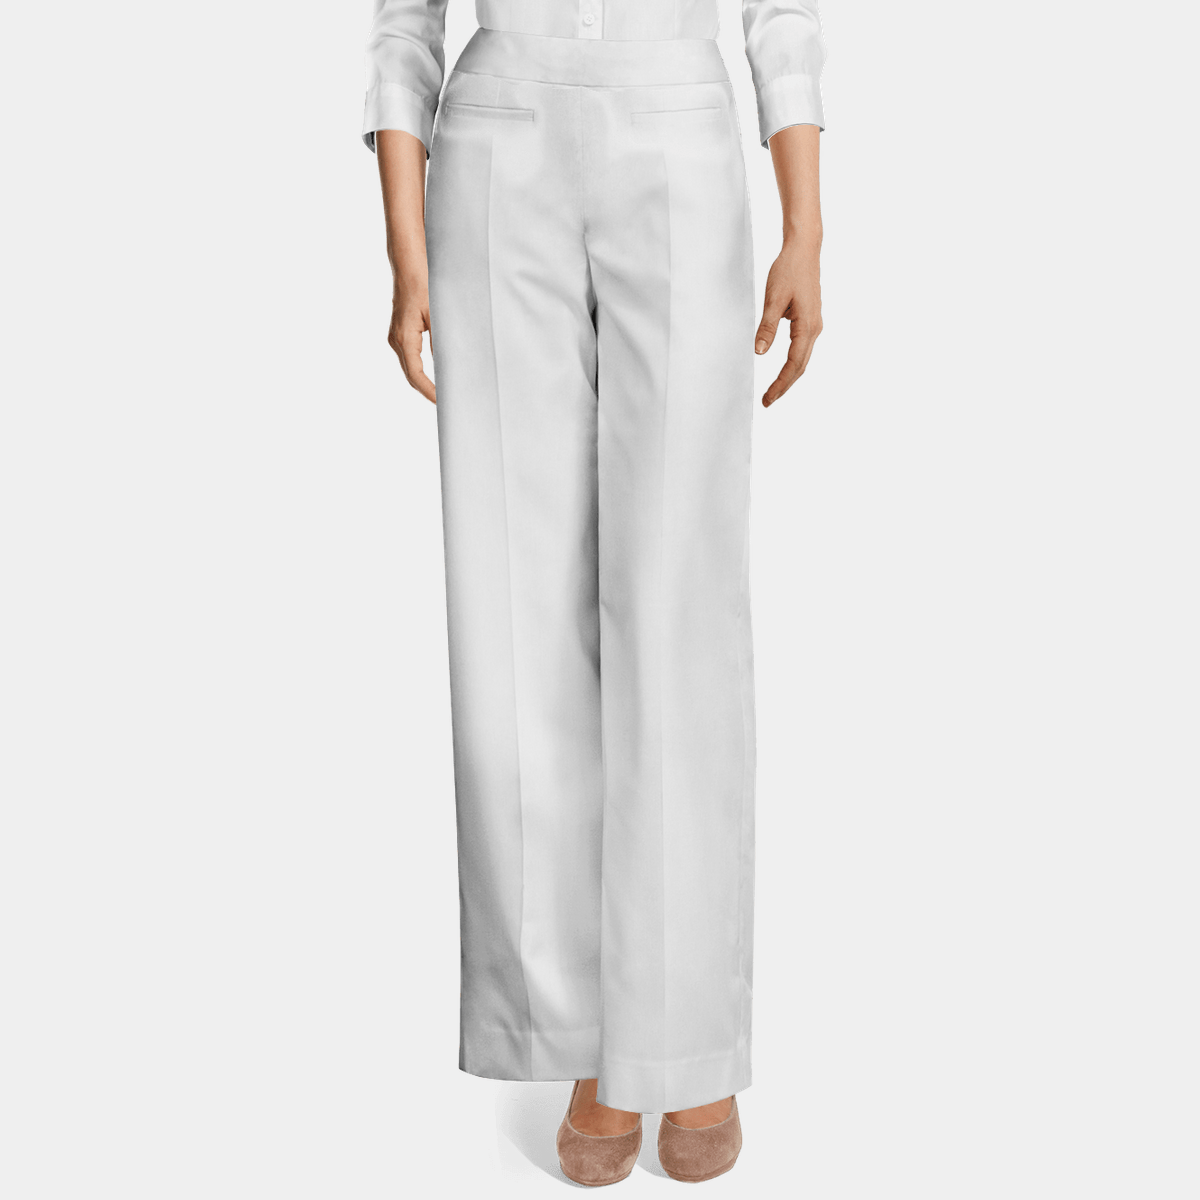 WHITE LINEN PANTS, Wide Leg Pants With Pockets, Pleated Linen Pants -   Canada